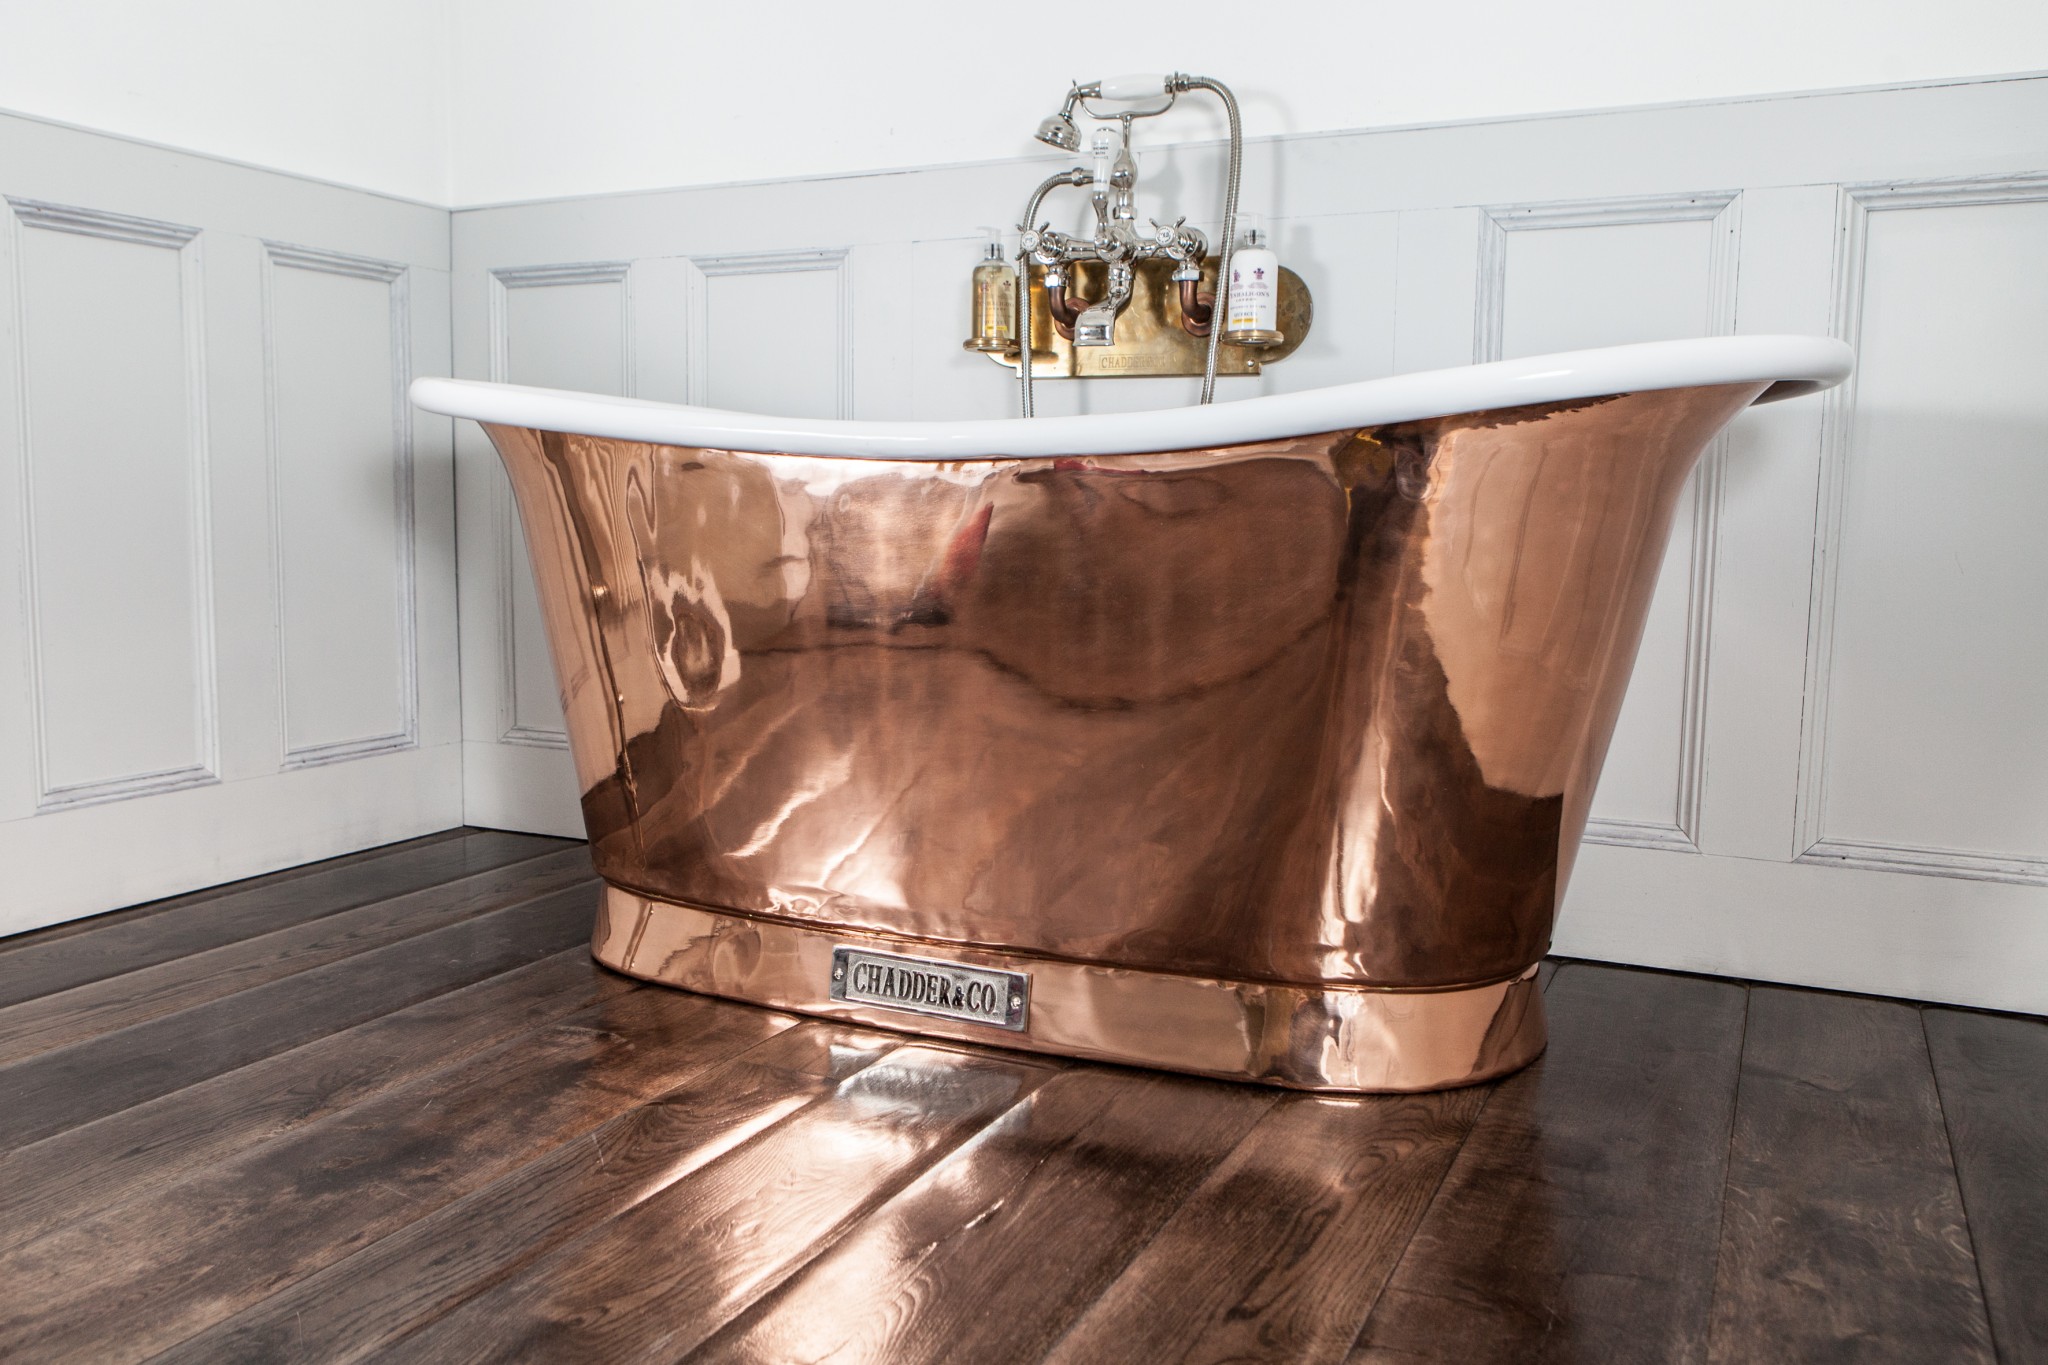 copper-bath-chadder-and-co-white-enamel-antique-bath-tub-nickel-taps-chrome-taps-bath-filler-wood-floor